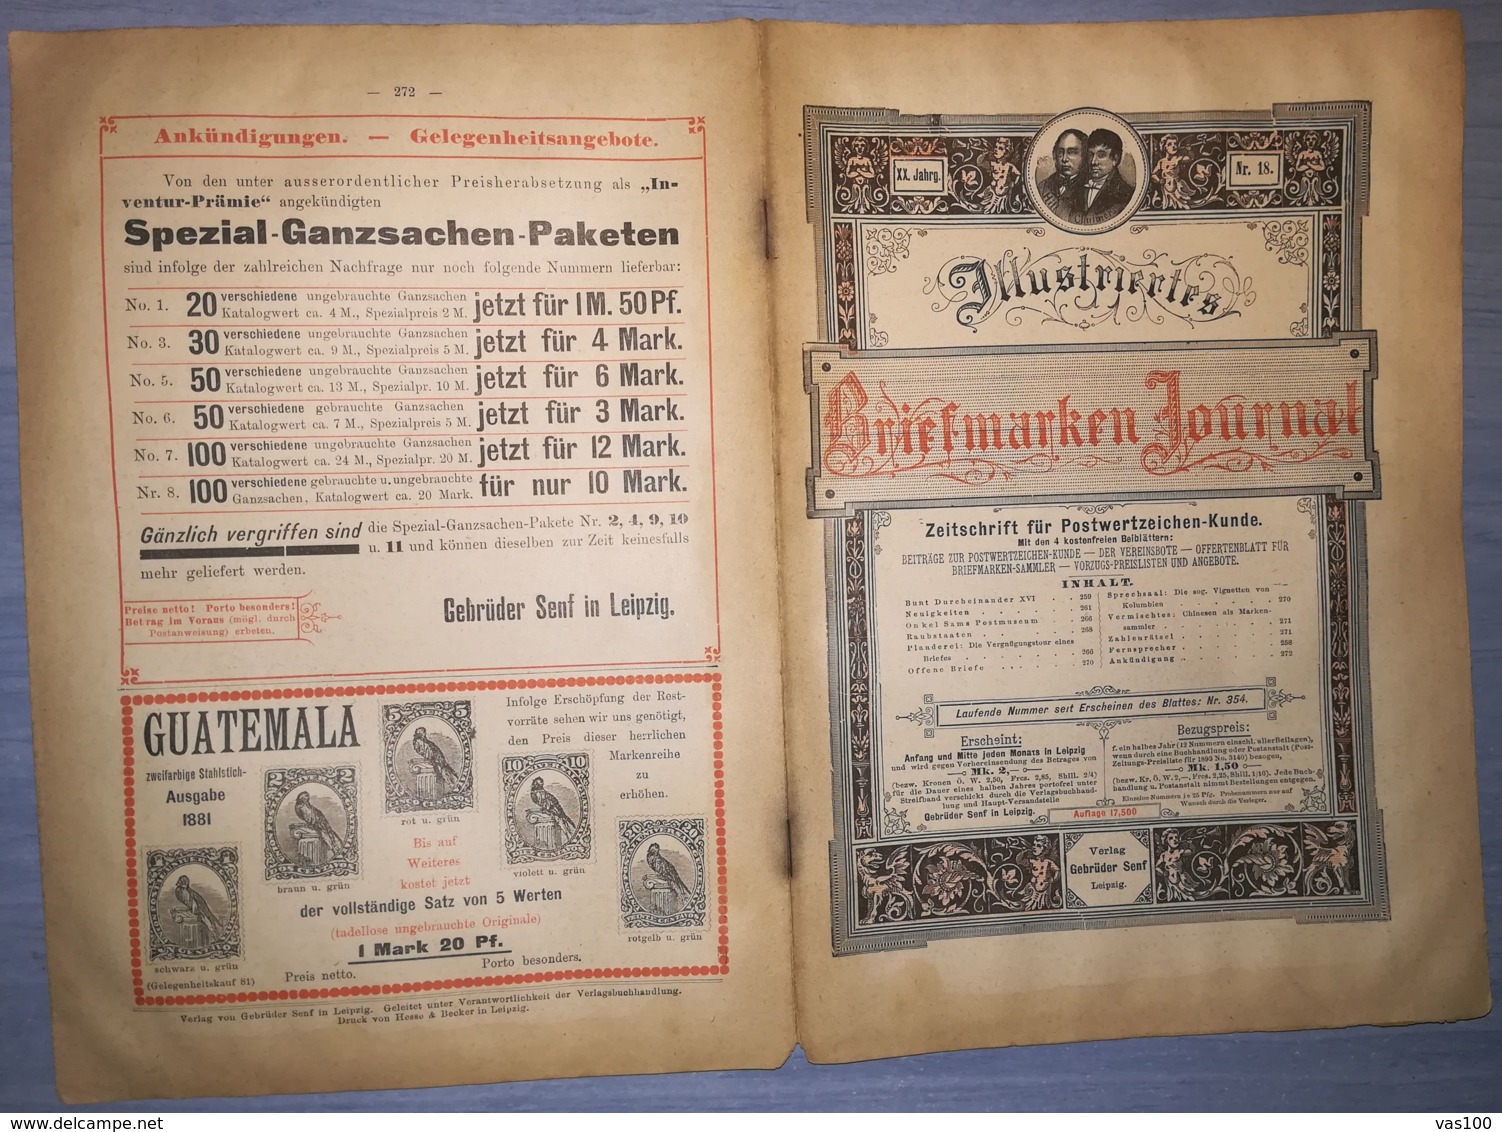 ILLUSTRATED STAMPS JOURNAL- ILLUSTRIERTES BRIEFMARKEN JOURNAL MAGAZINE, LEIPZIG, NR 18, SEPTEMBER 1893, GERMANY - German (until 1940)